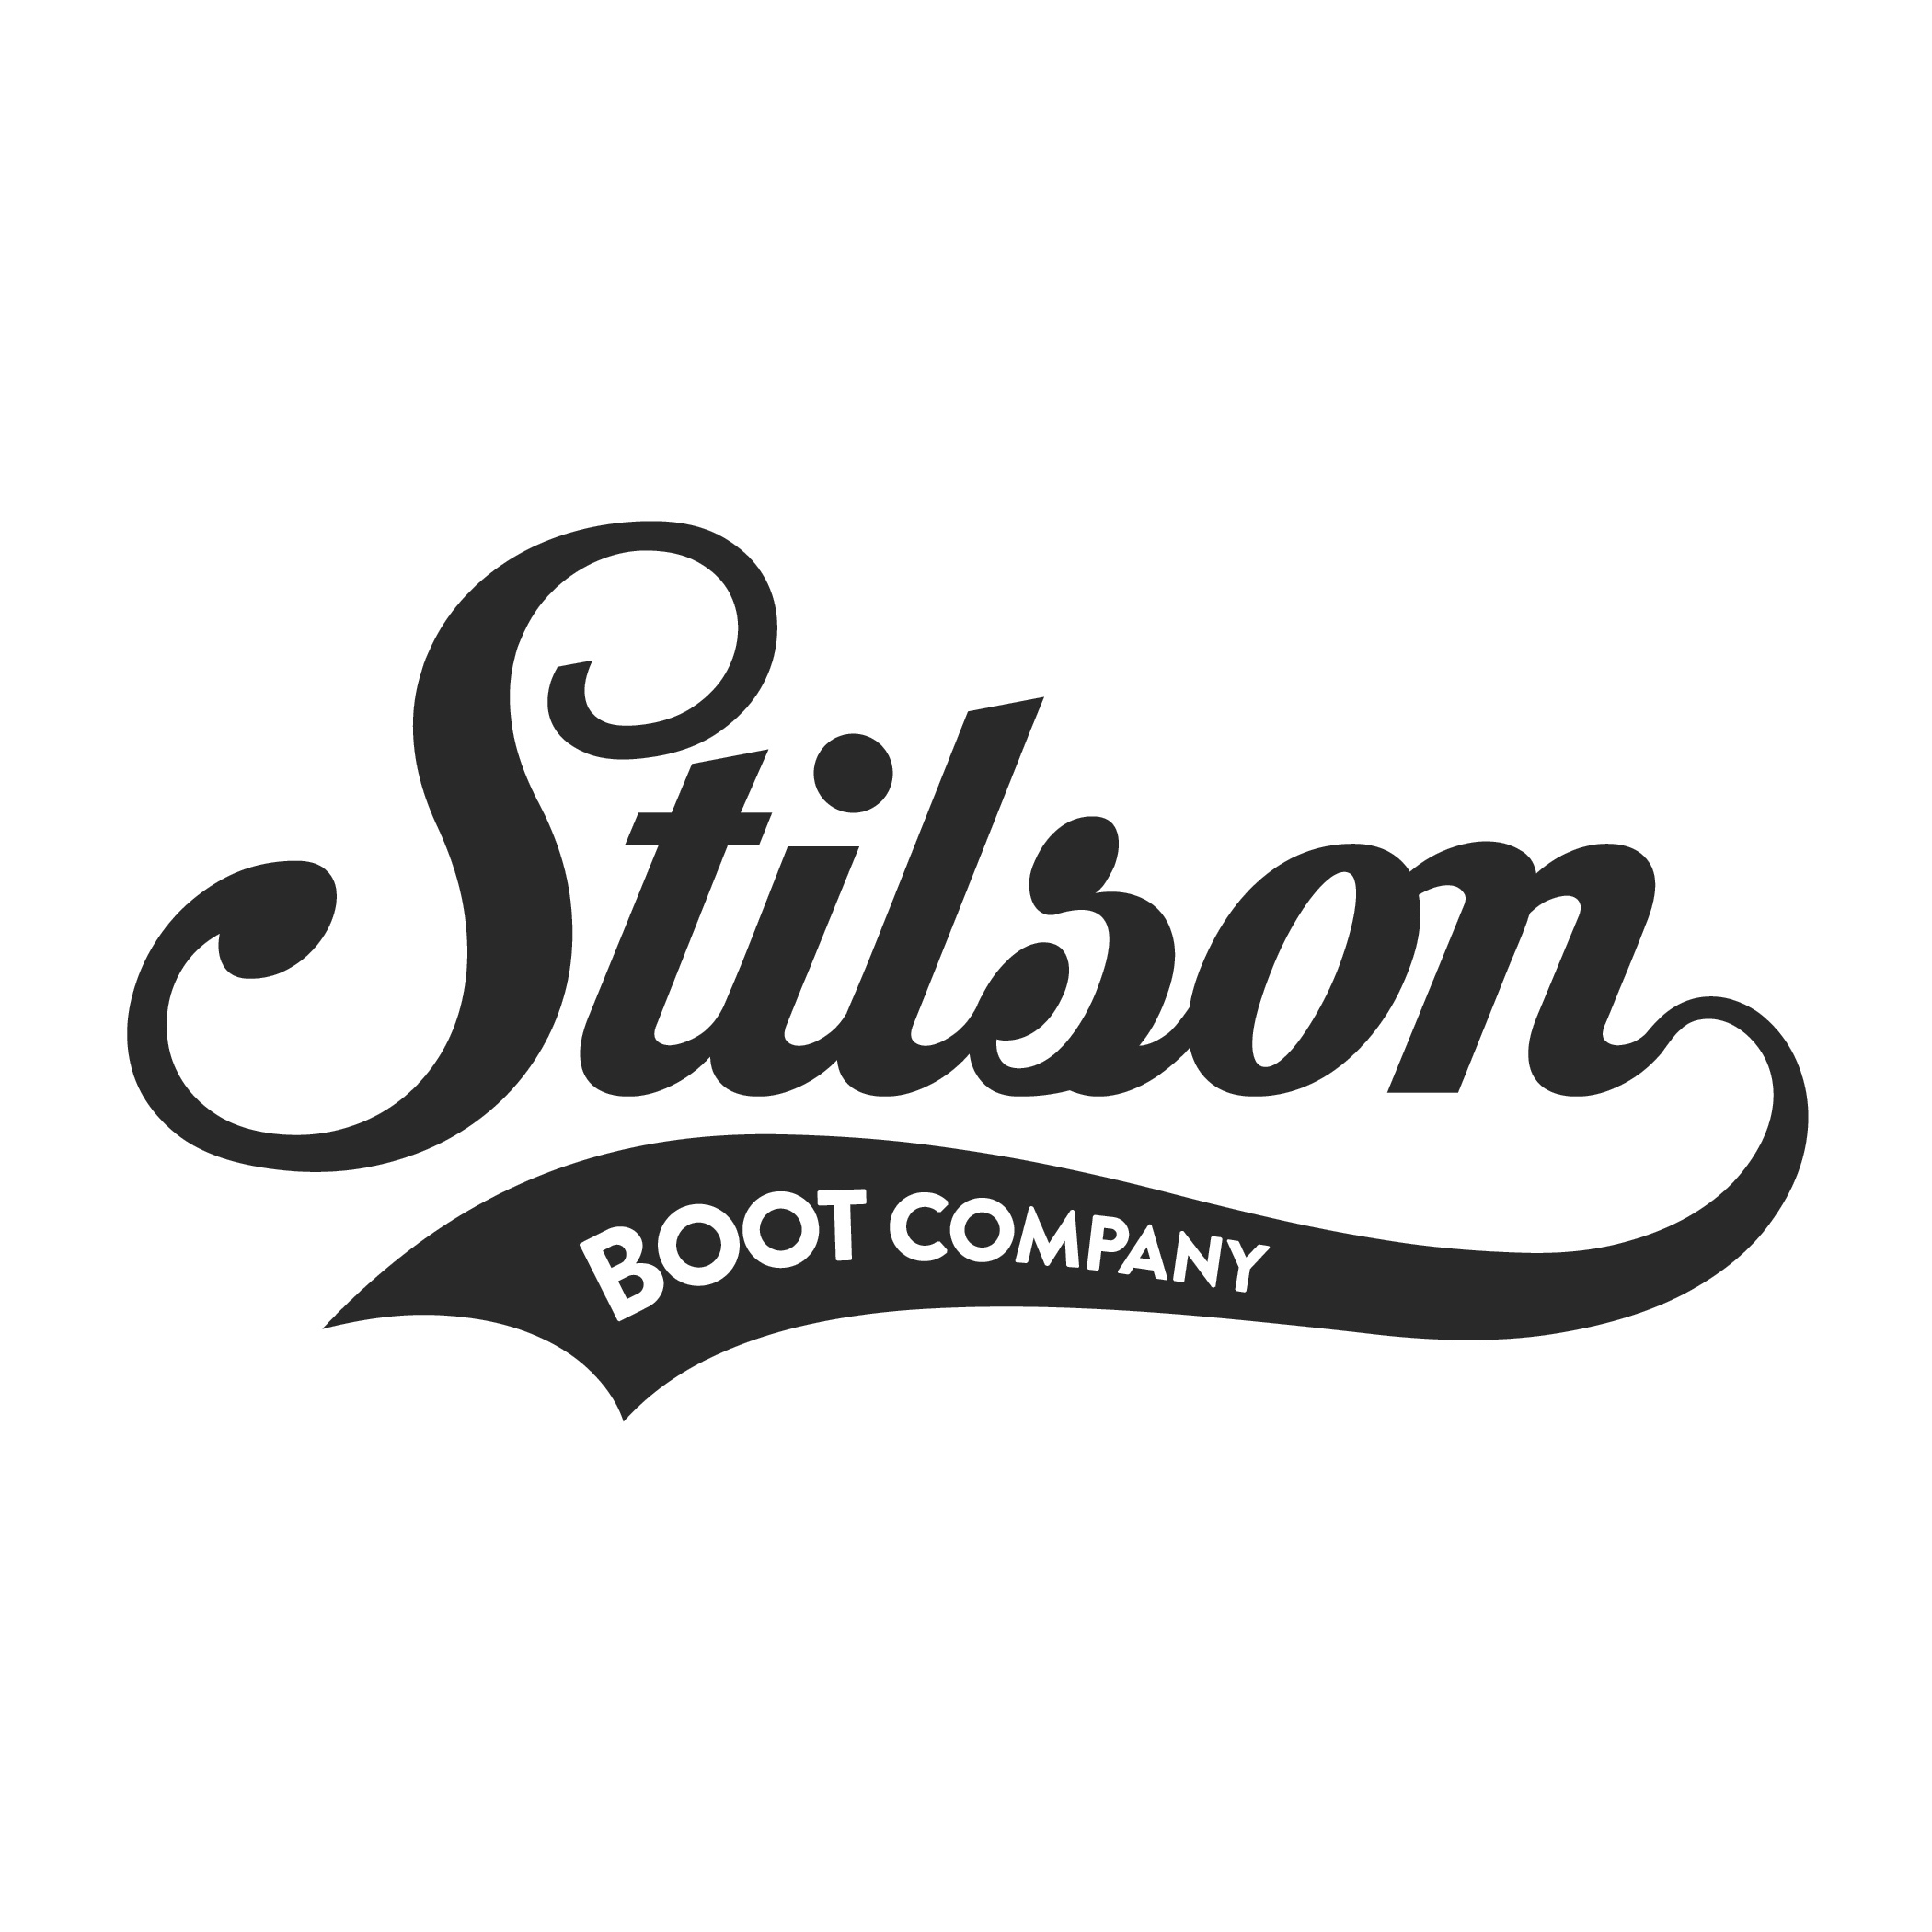 Final Stilson Script logo_84.jpg